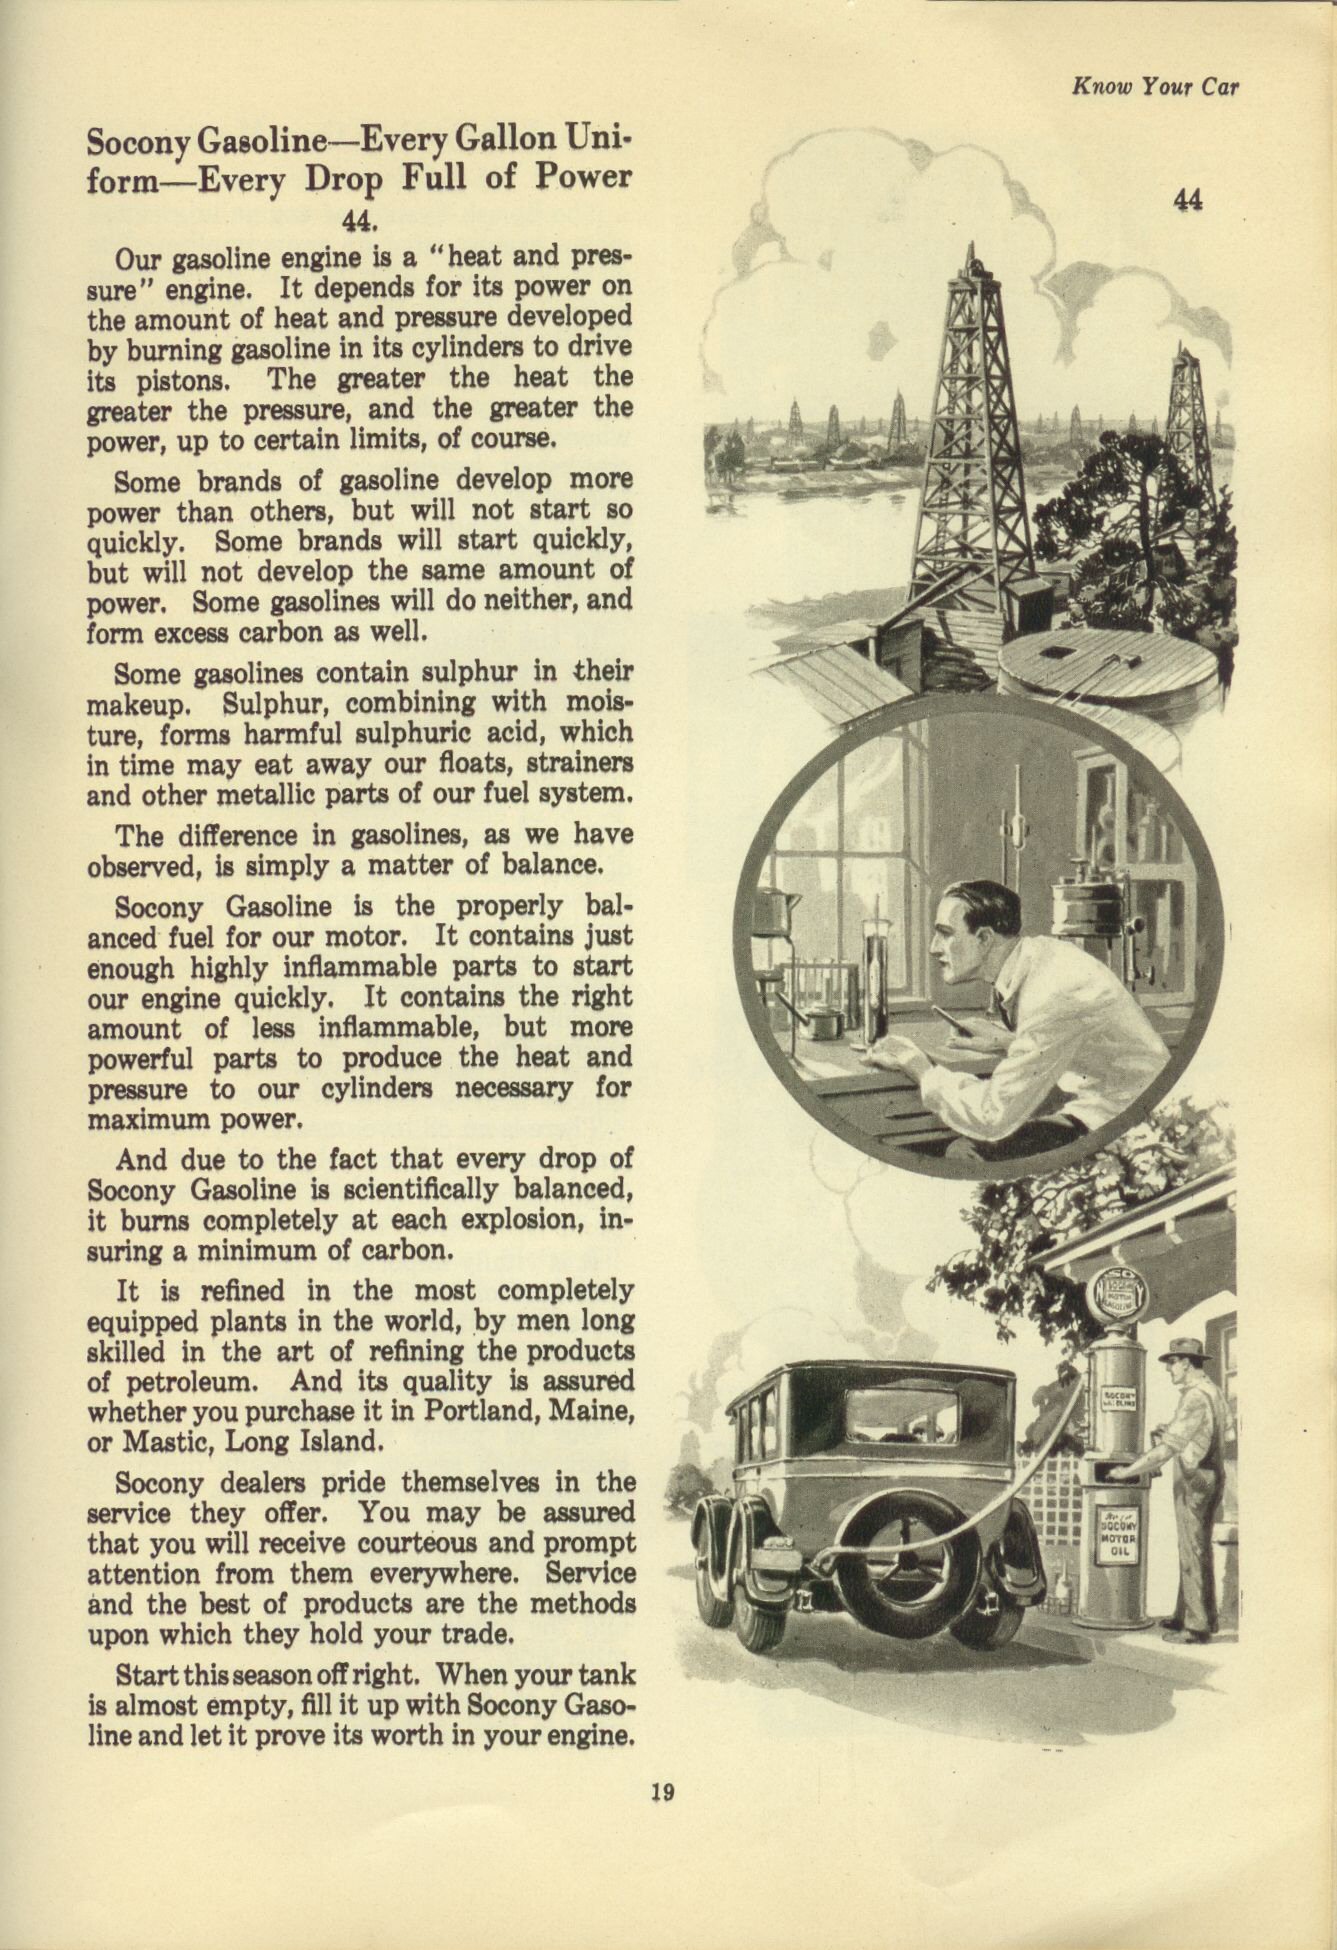 1928 Know Your Car Handbook Page 11